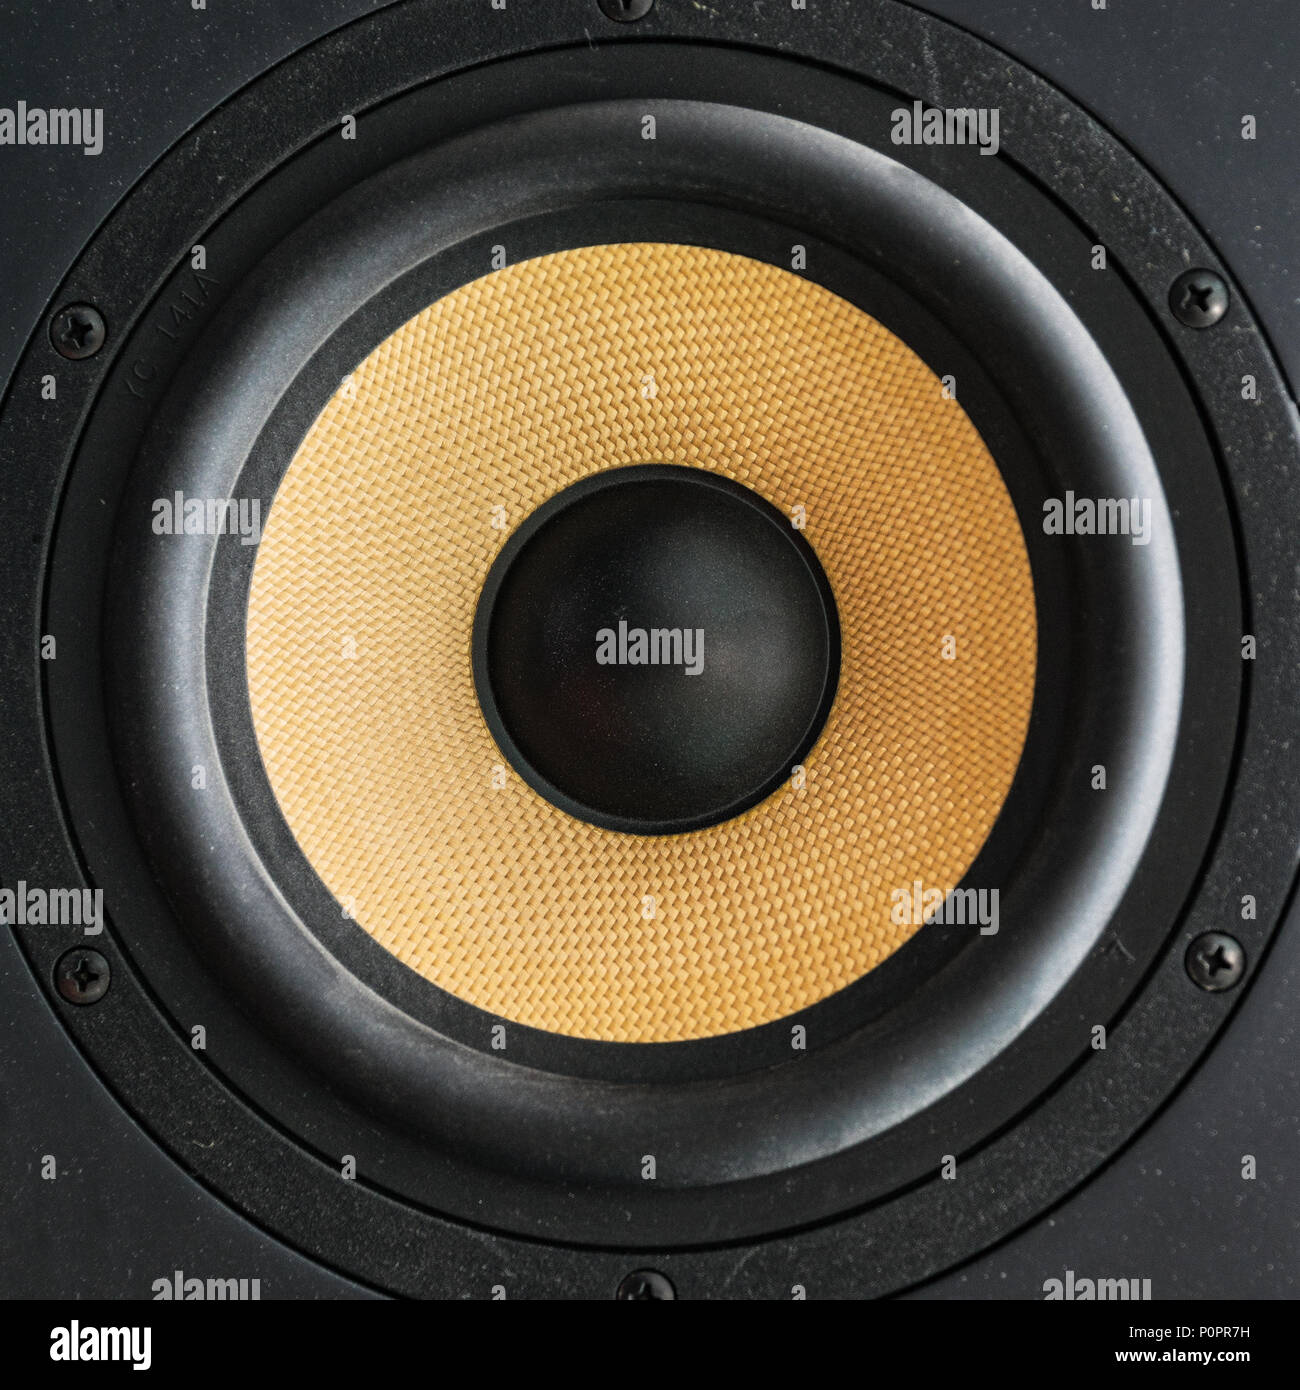 Speaker loudspeaker with yellow diffuser Stock Photo